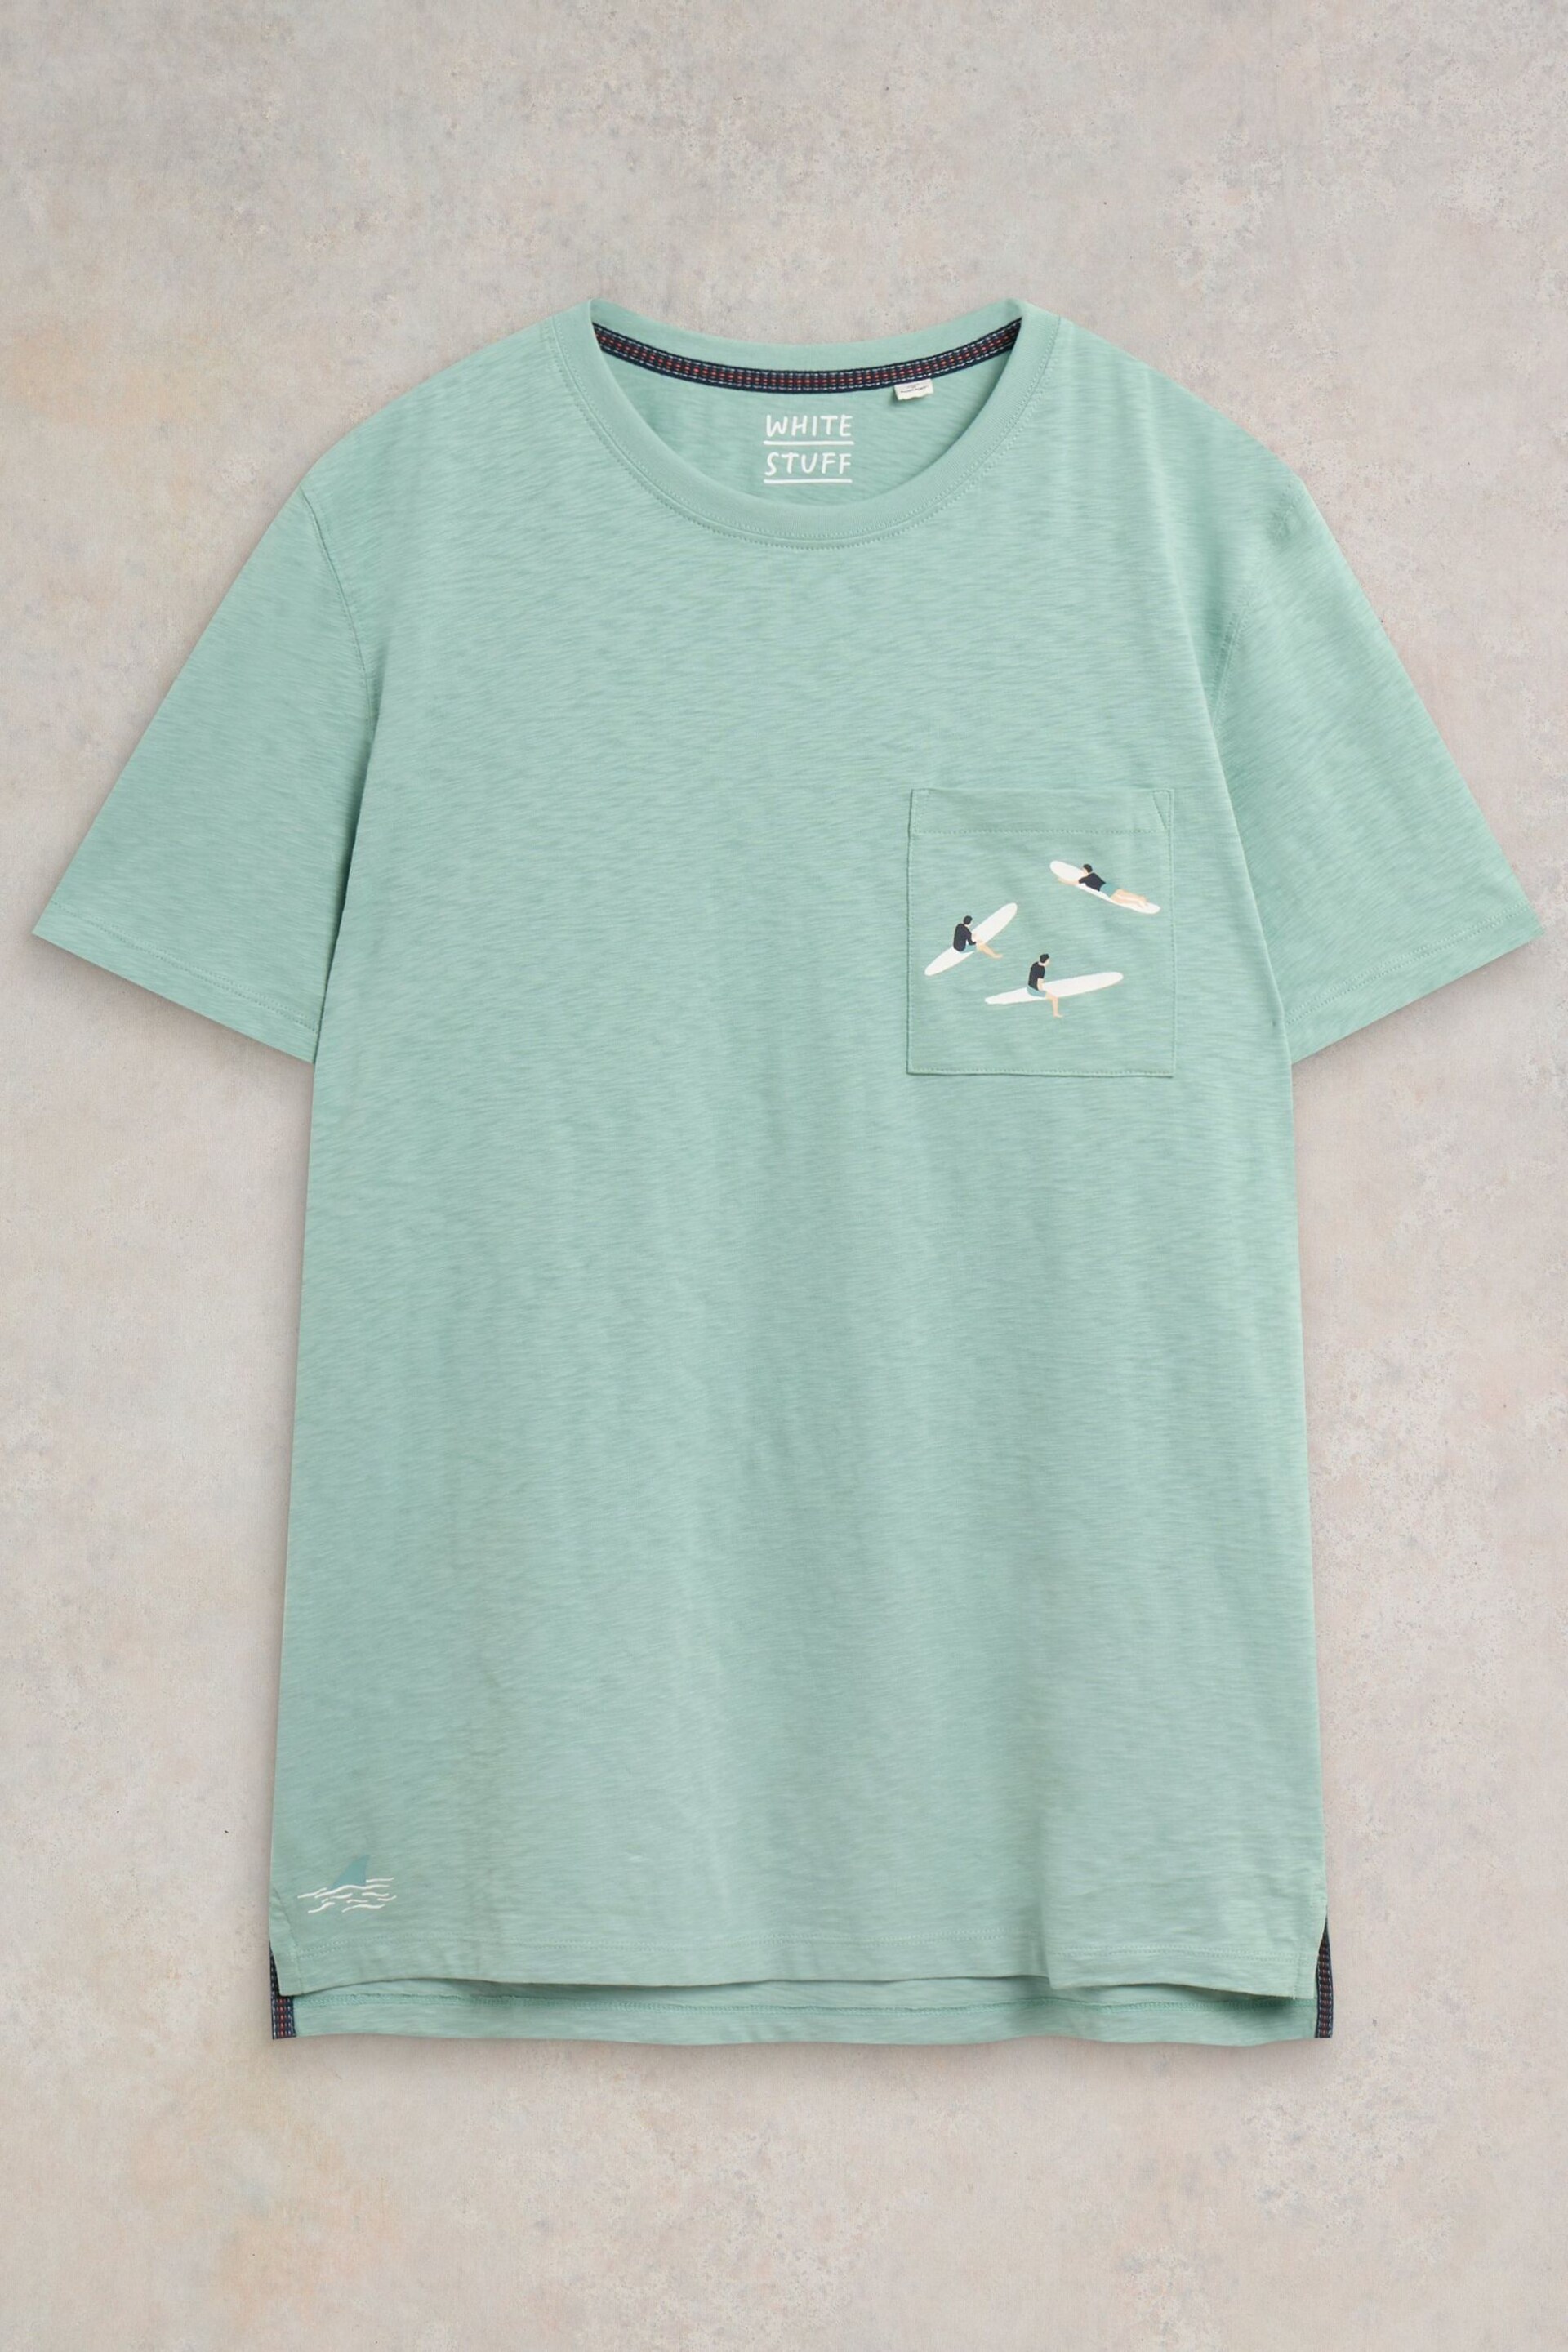 White Stuff Green Shark Pocket Graphic T-Shirt - Image 5 of 7